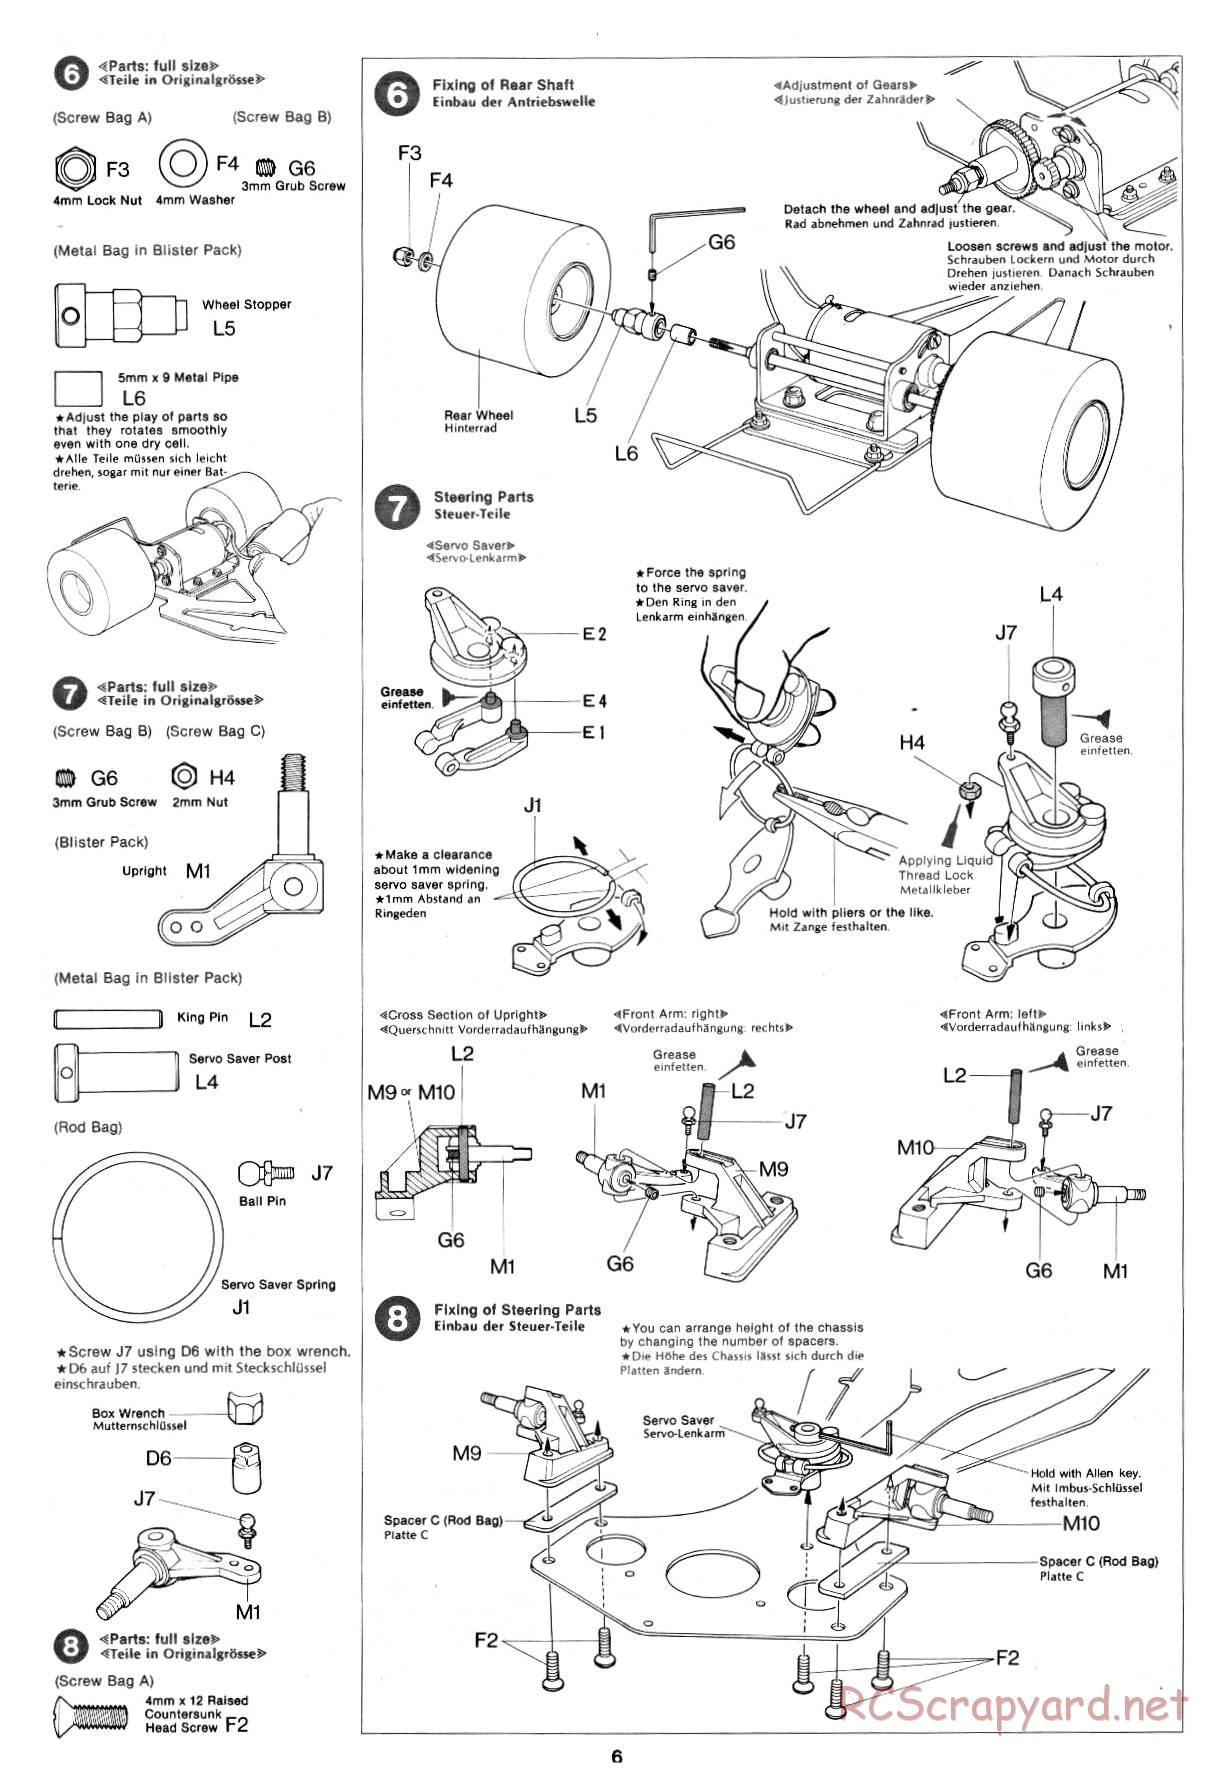 Tamiya - JPS Lotus 79 (CS) - 58020 - Manual - Page 6